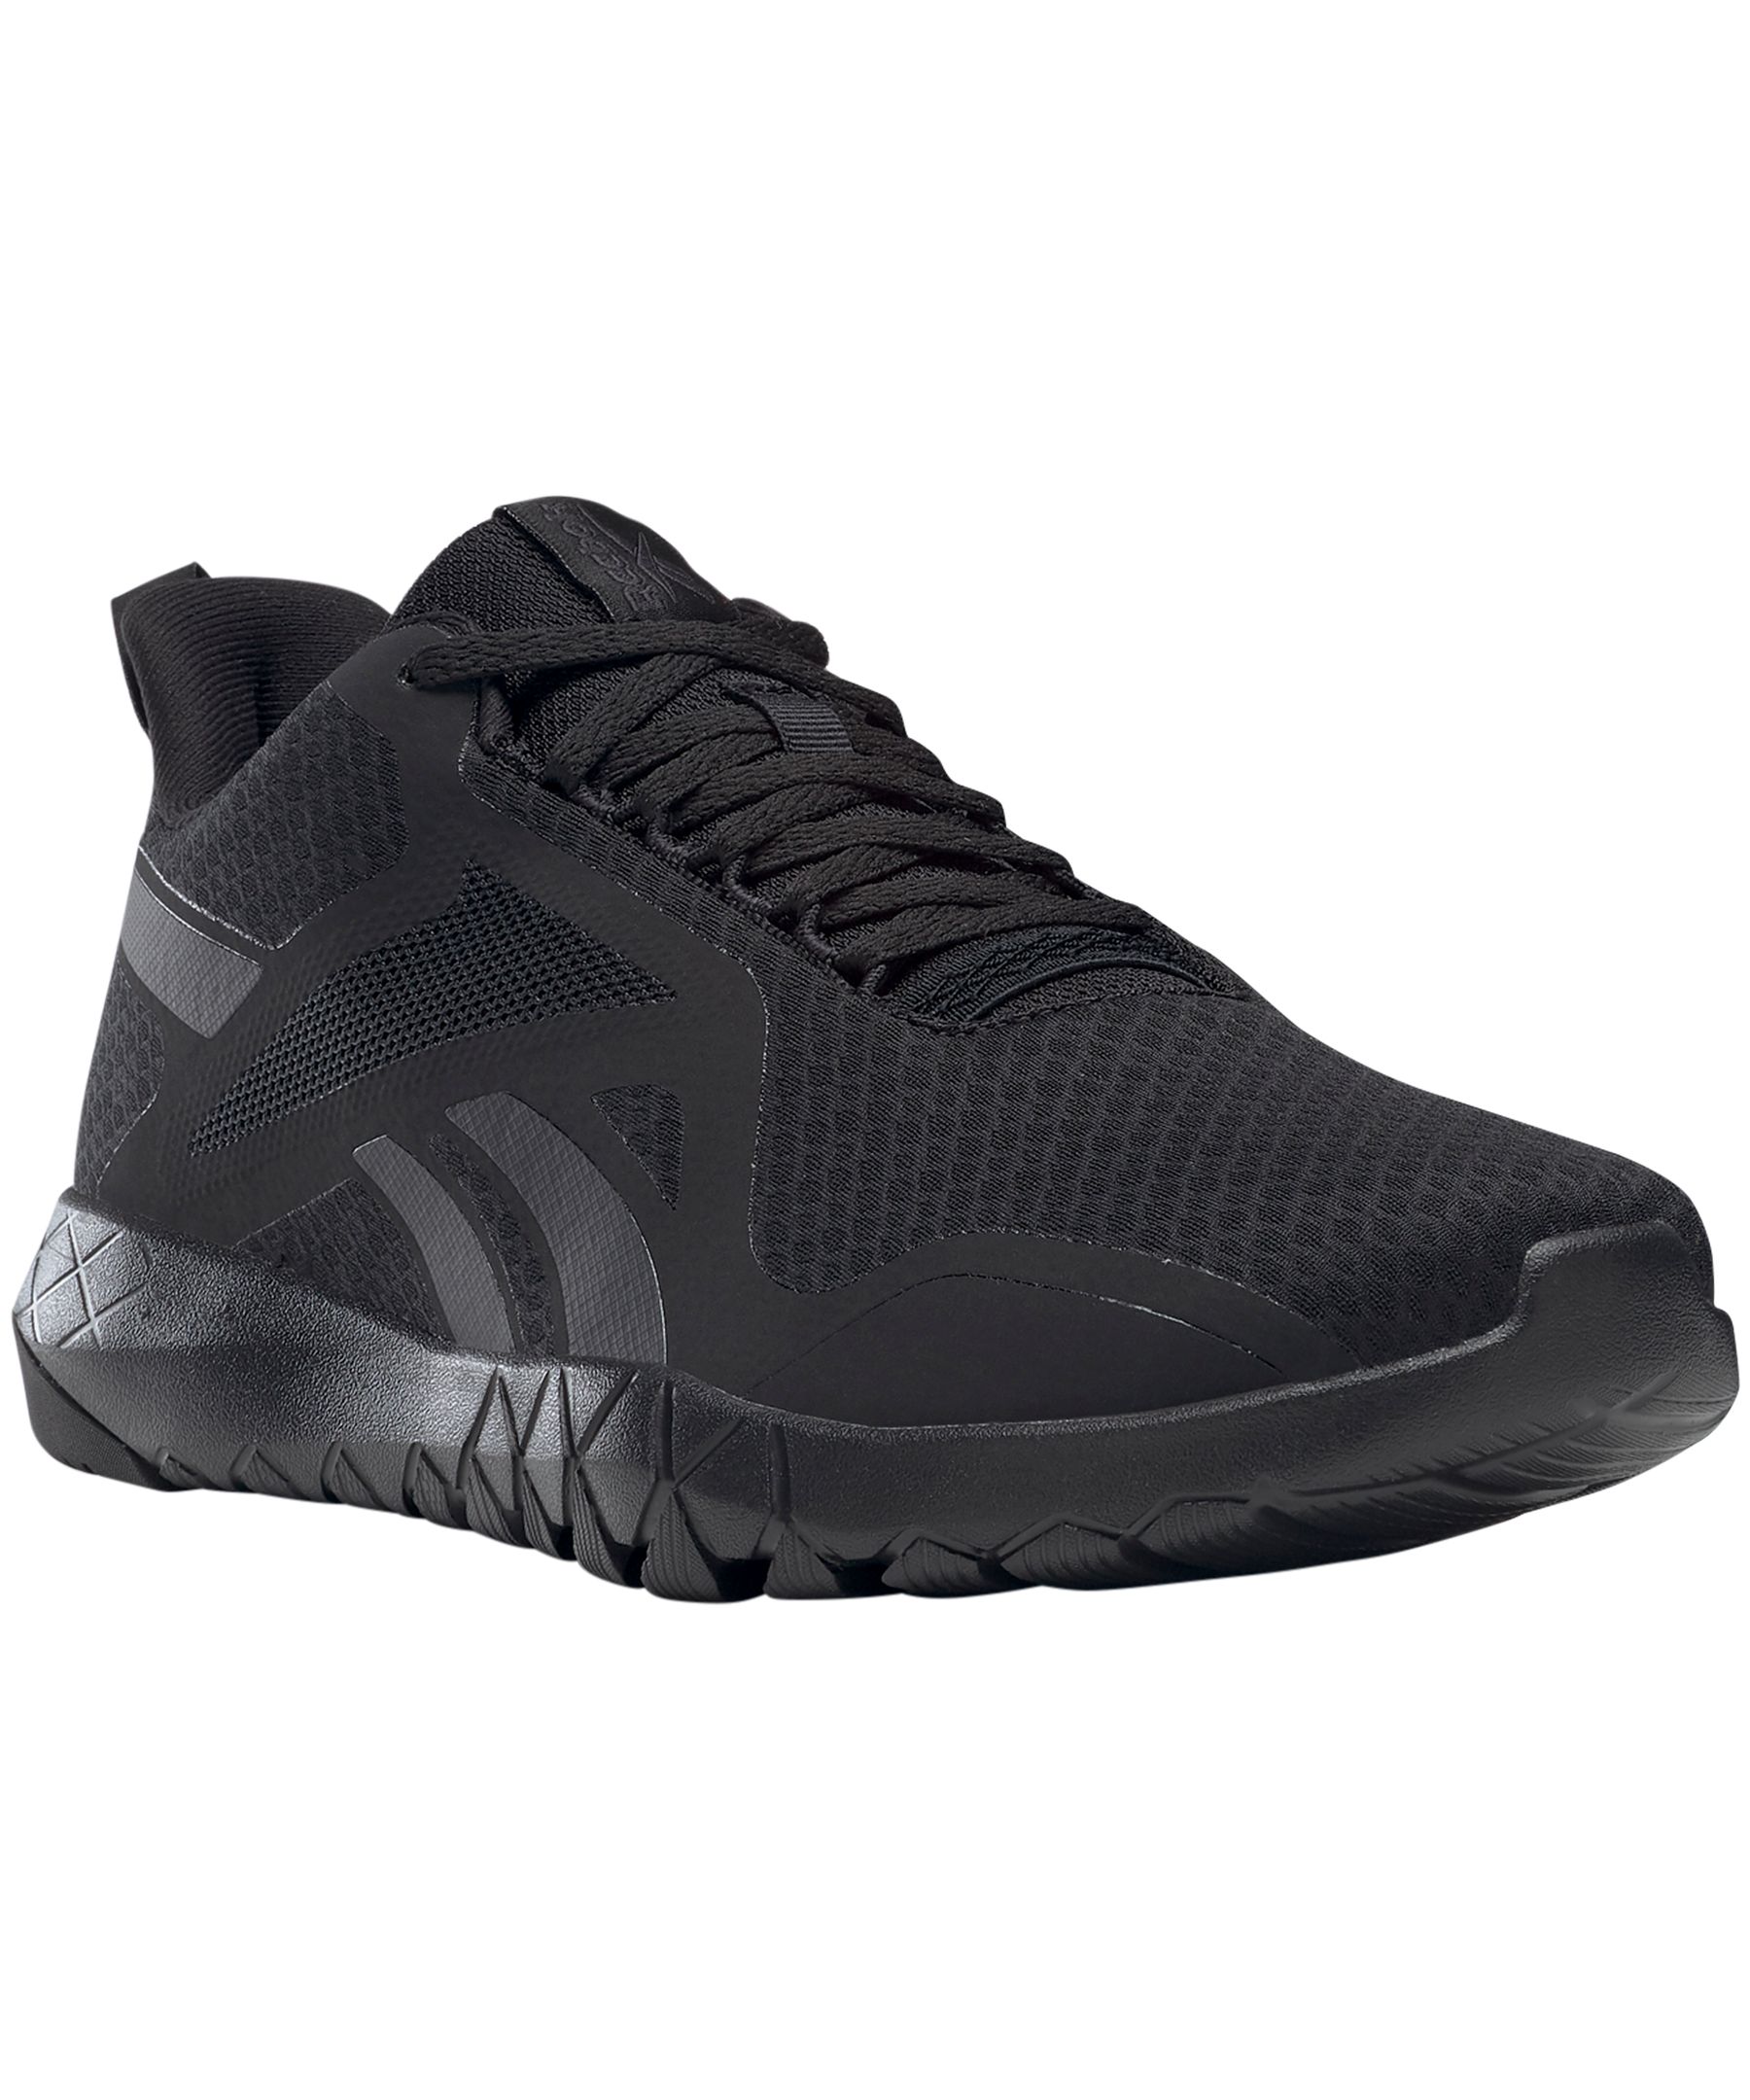 Reebok Men's Flexagon Force 3.0 Wide Fit Trainer Shoes- Black